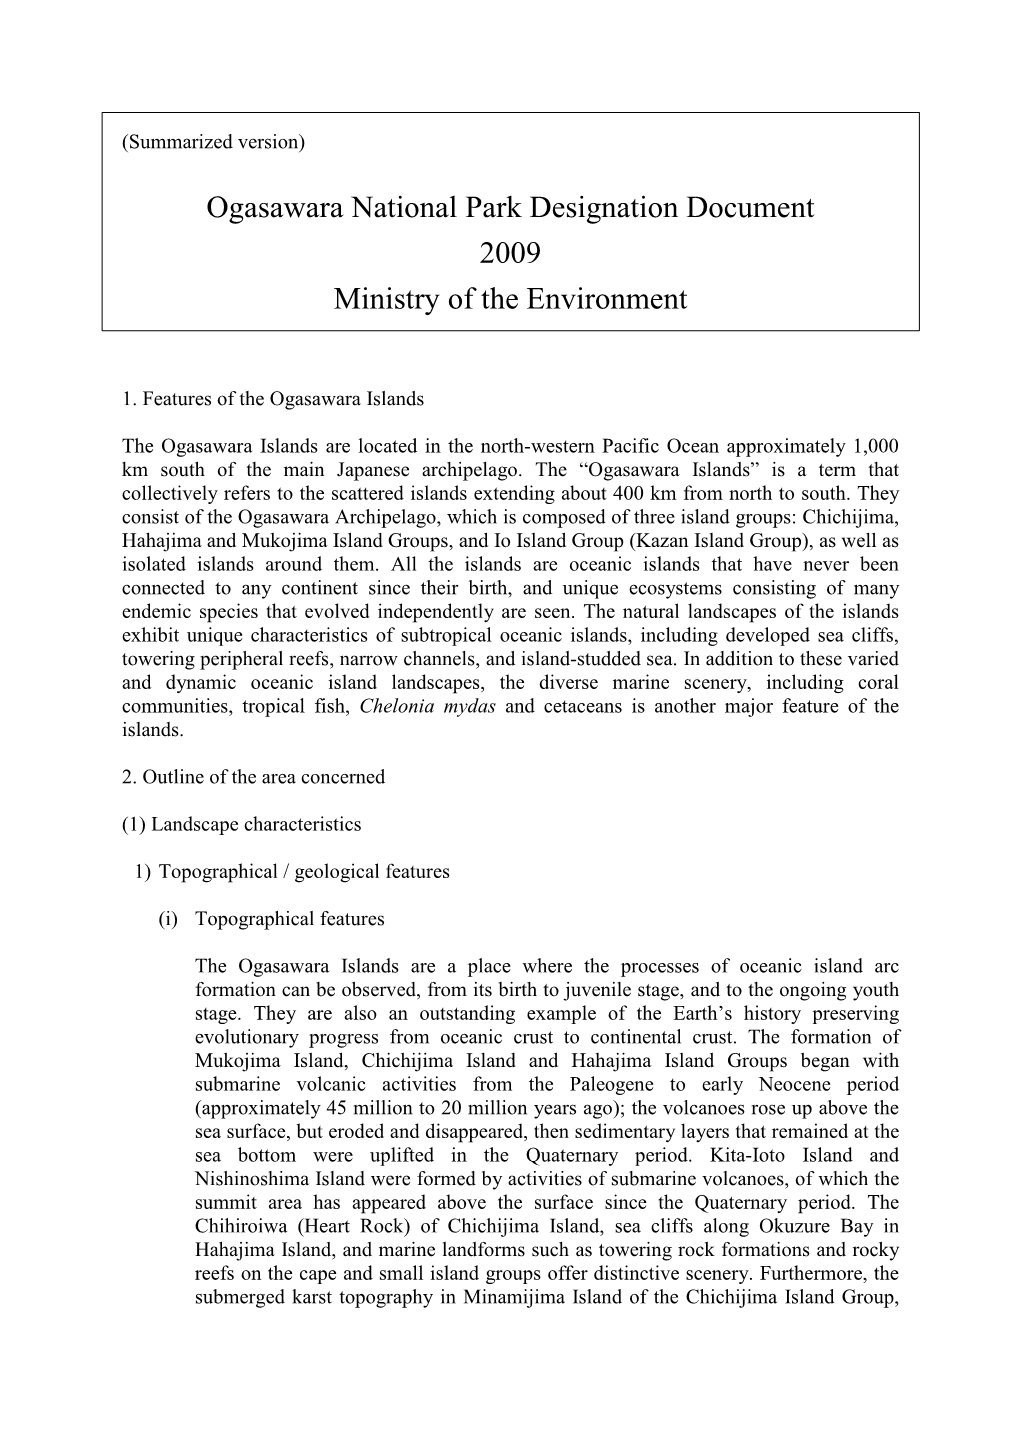 Ogasawara National Park Designation Document 2009 Ministry of the Environment